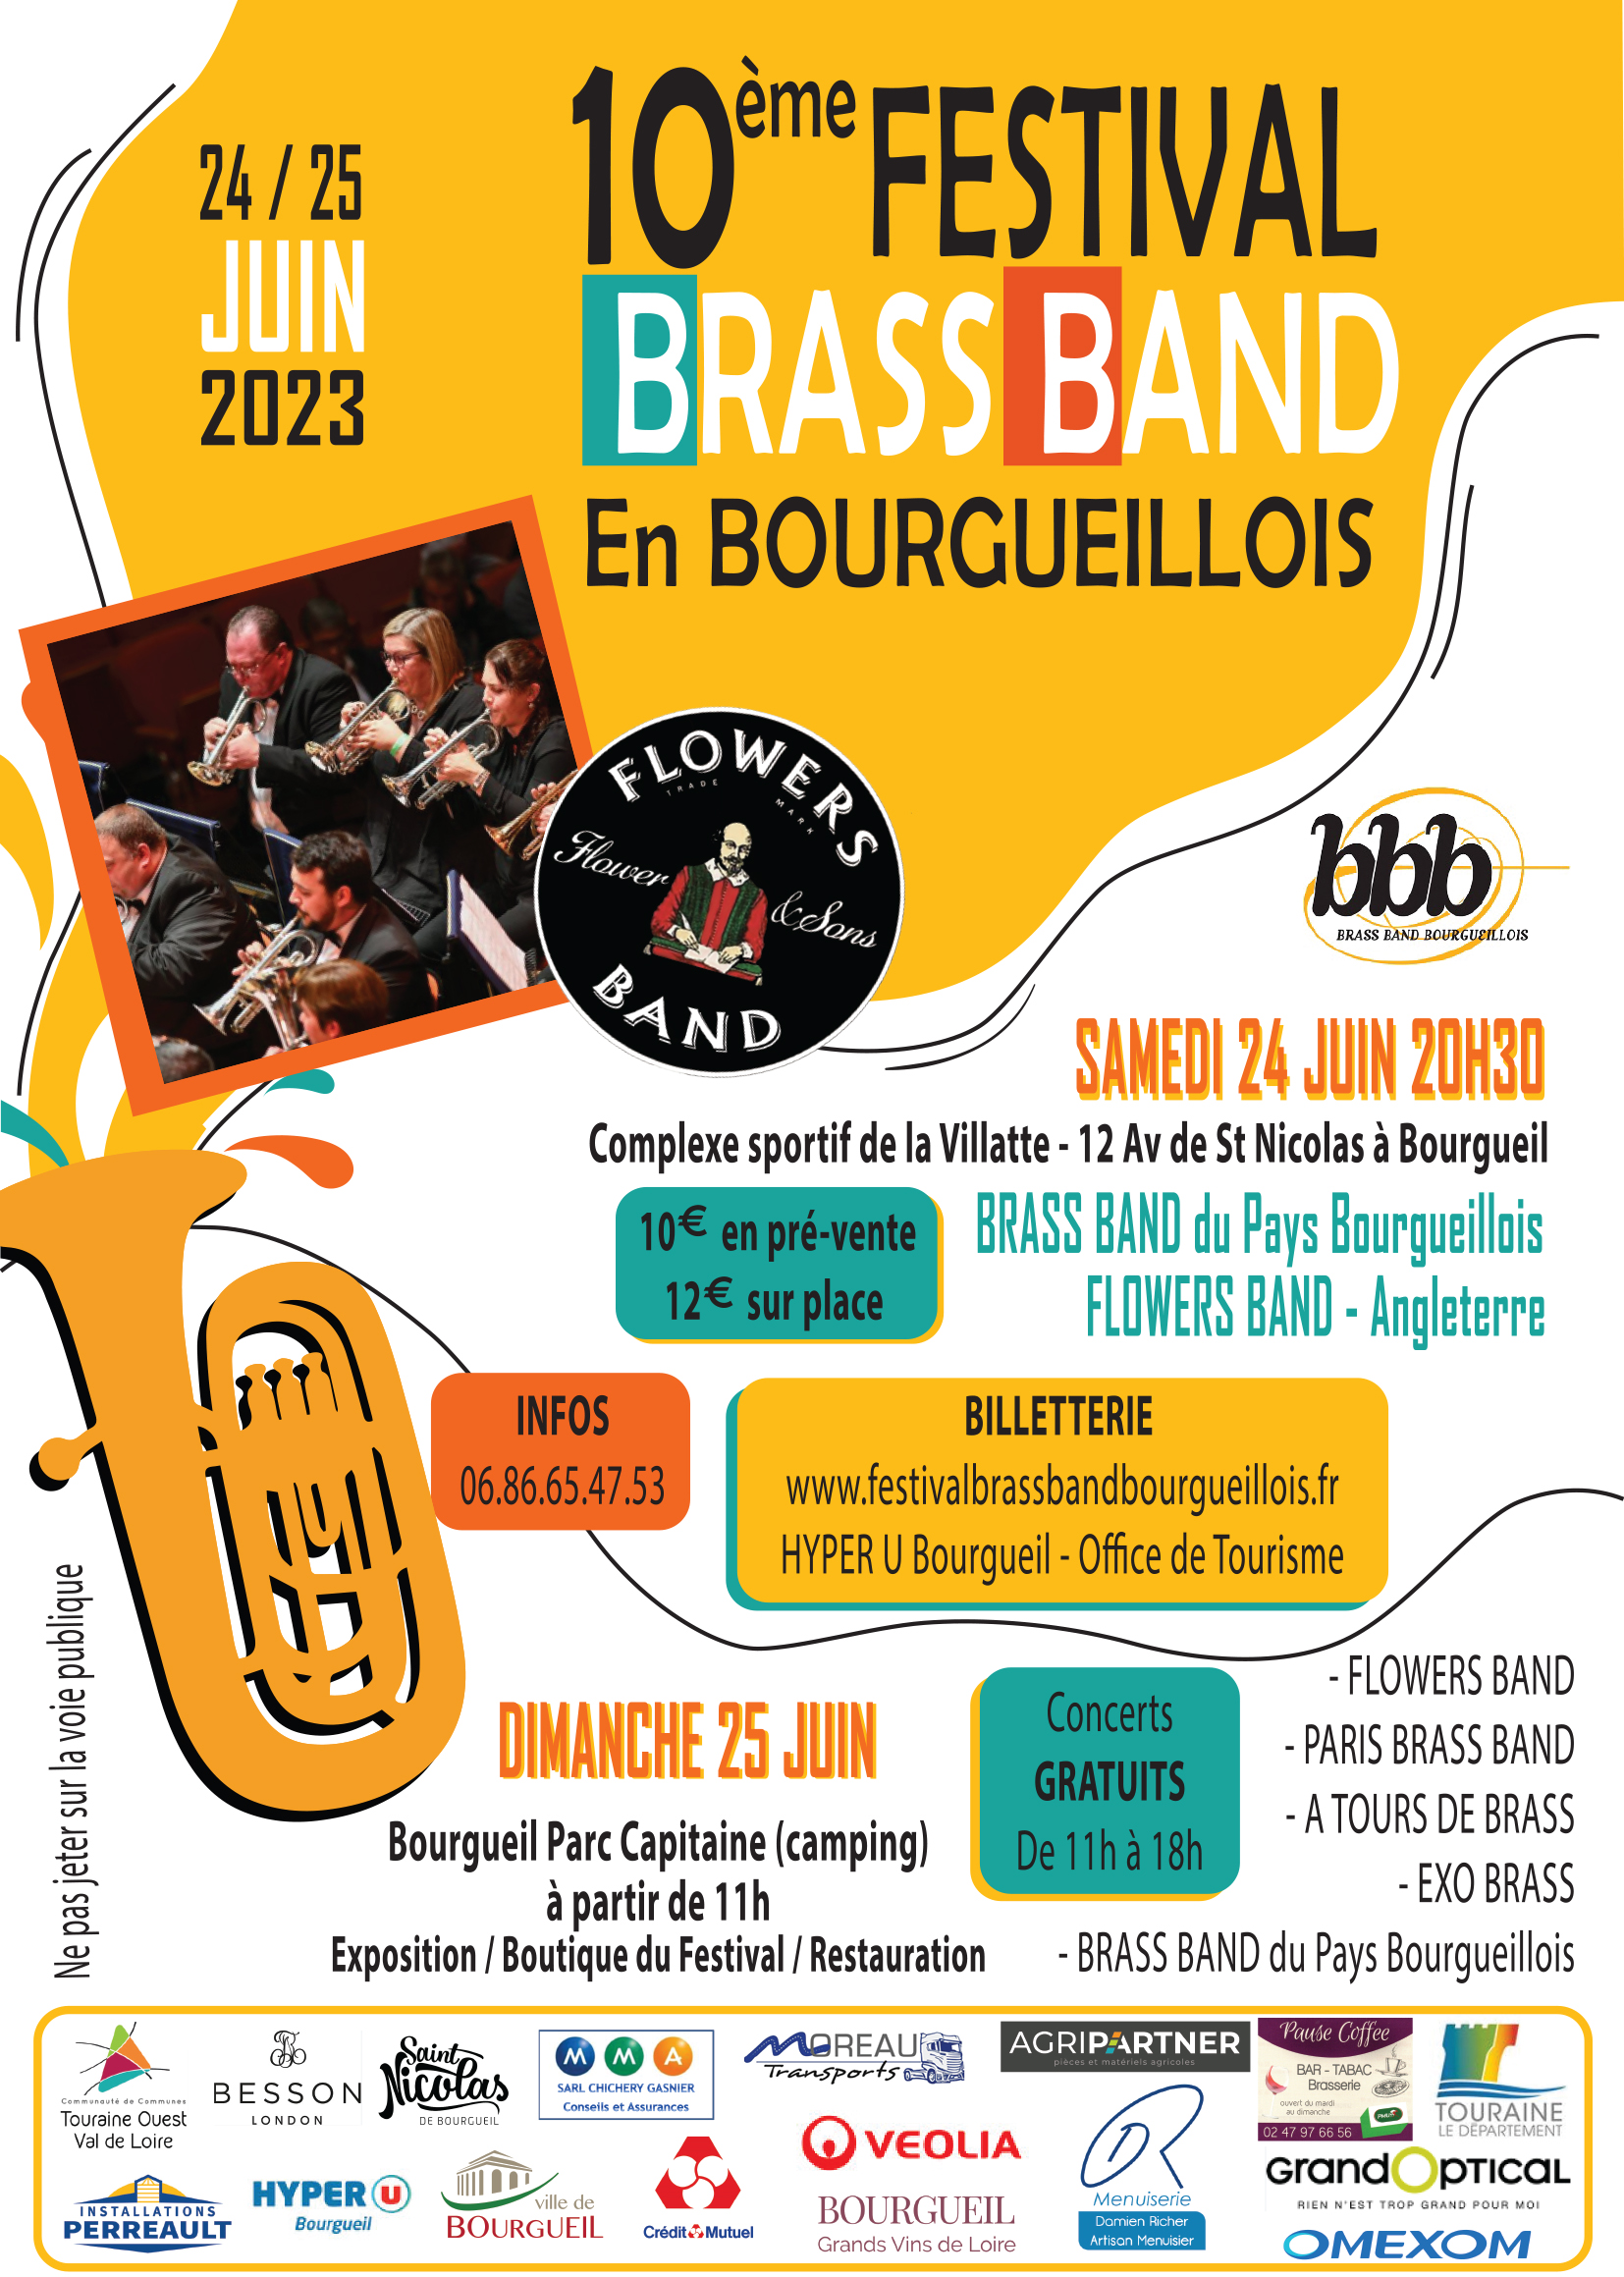 Festival Brass Band en Bourgueillois